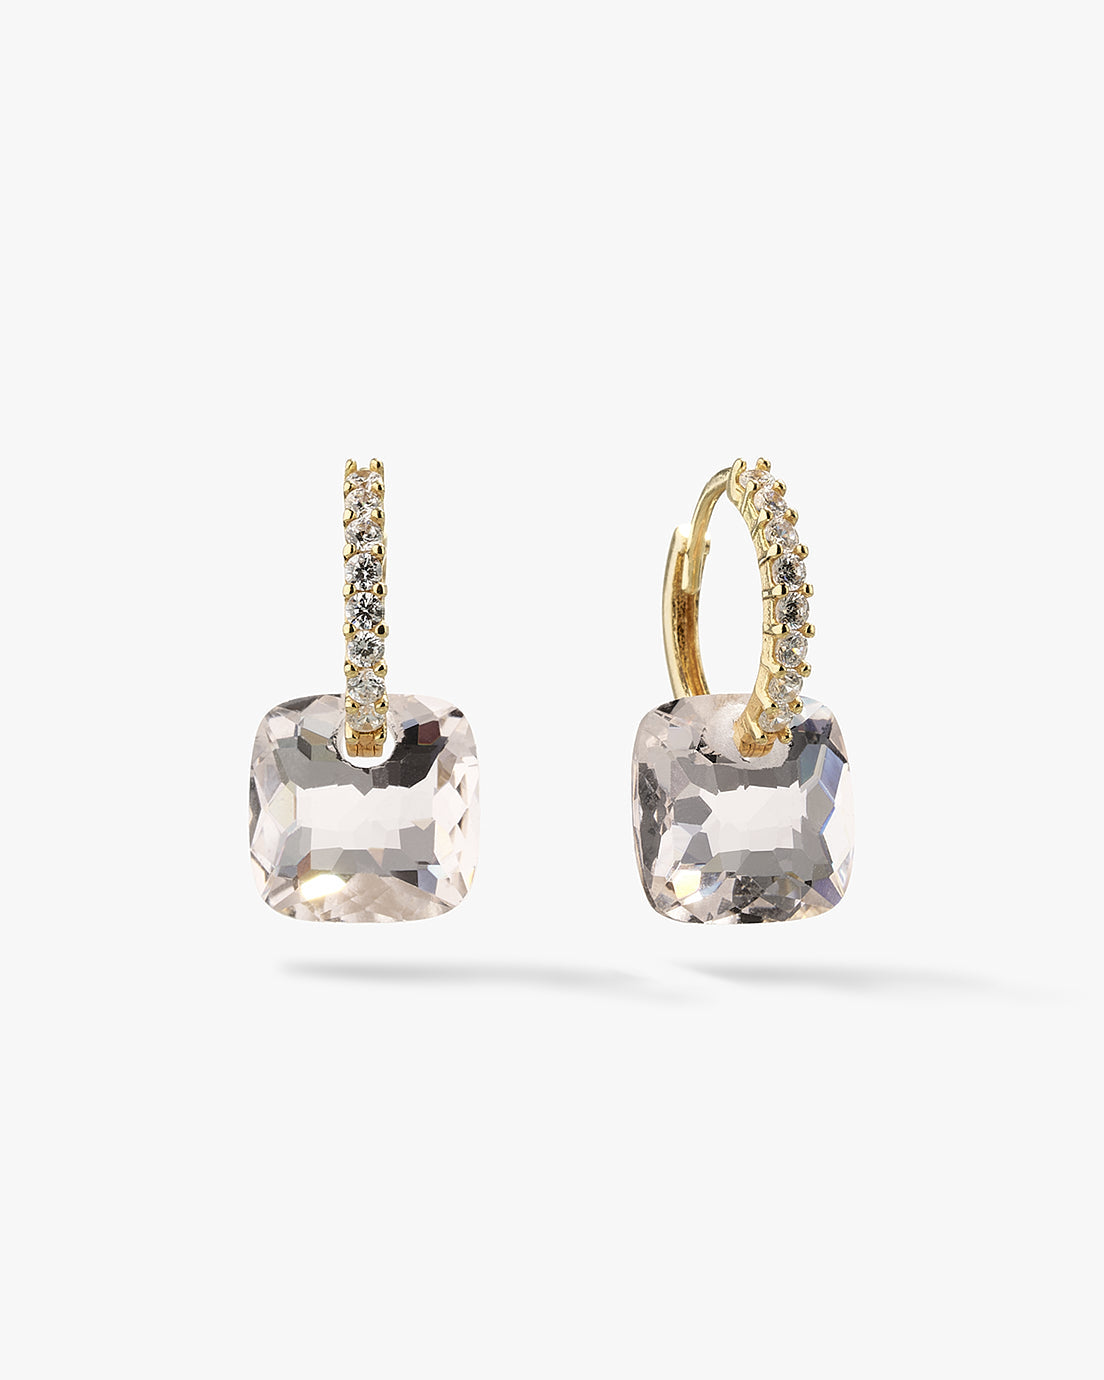 Gemstone Hoop Earrings - GioielliFazio